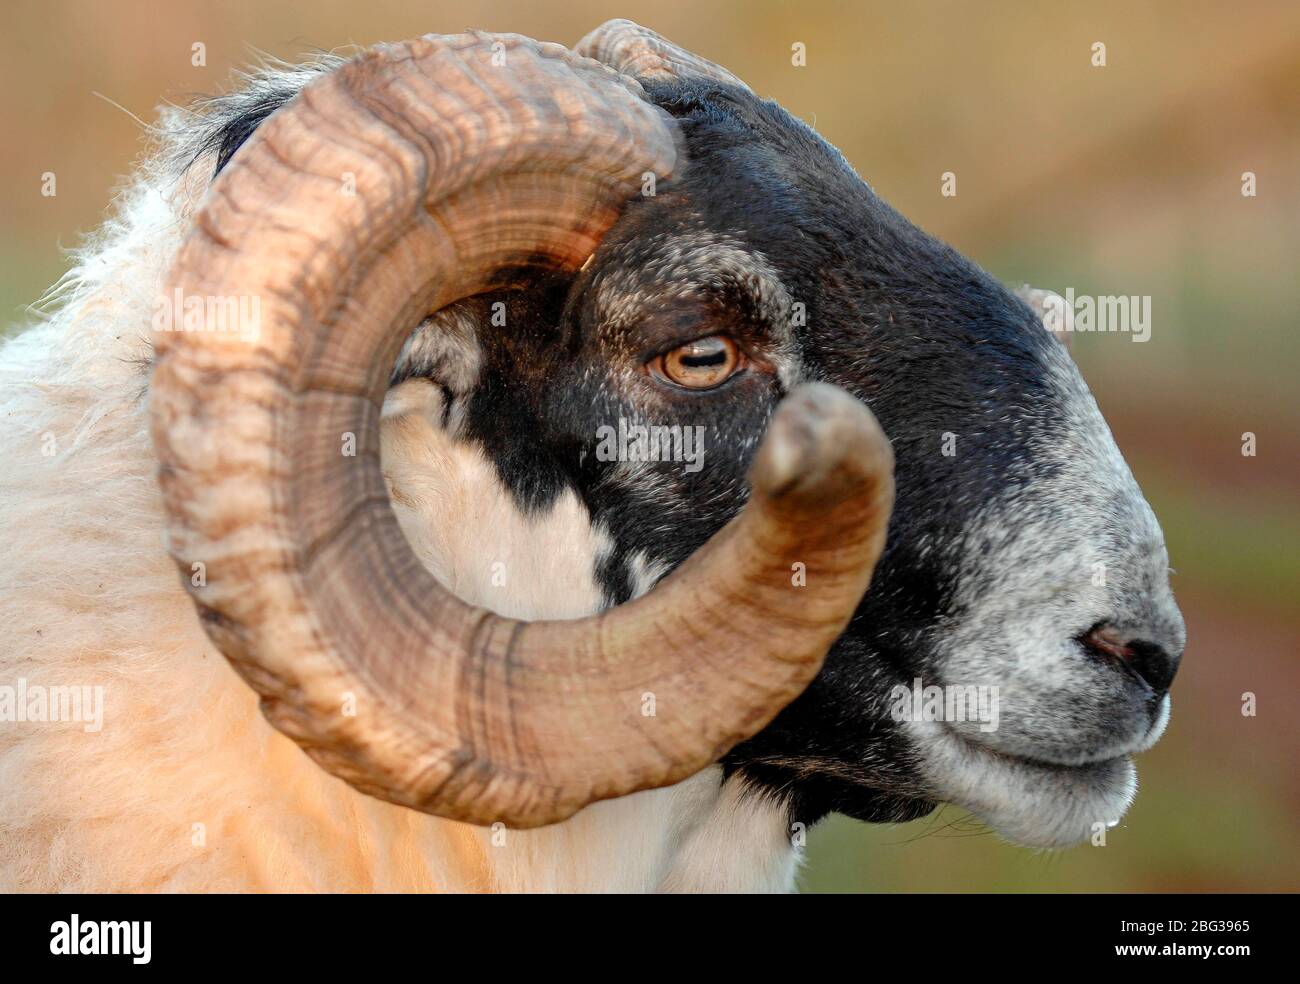 Close up of a Blackface Ram's head in profile, Scotland. Stock Photo